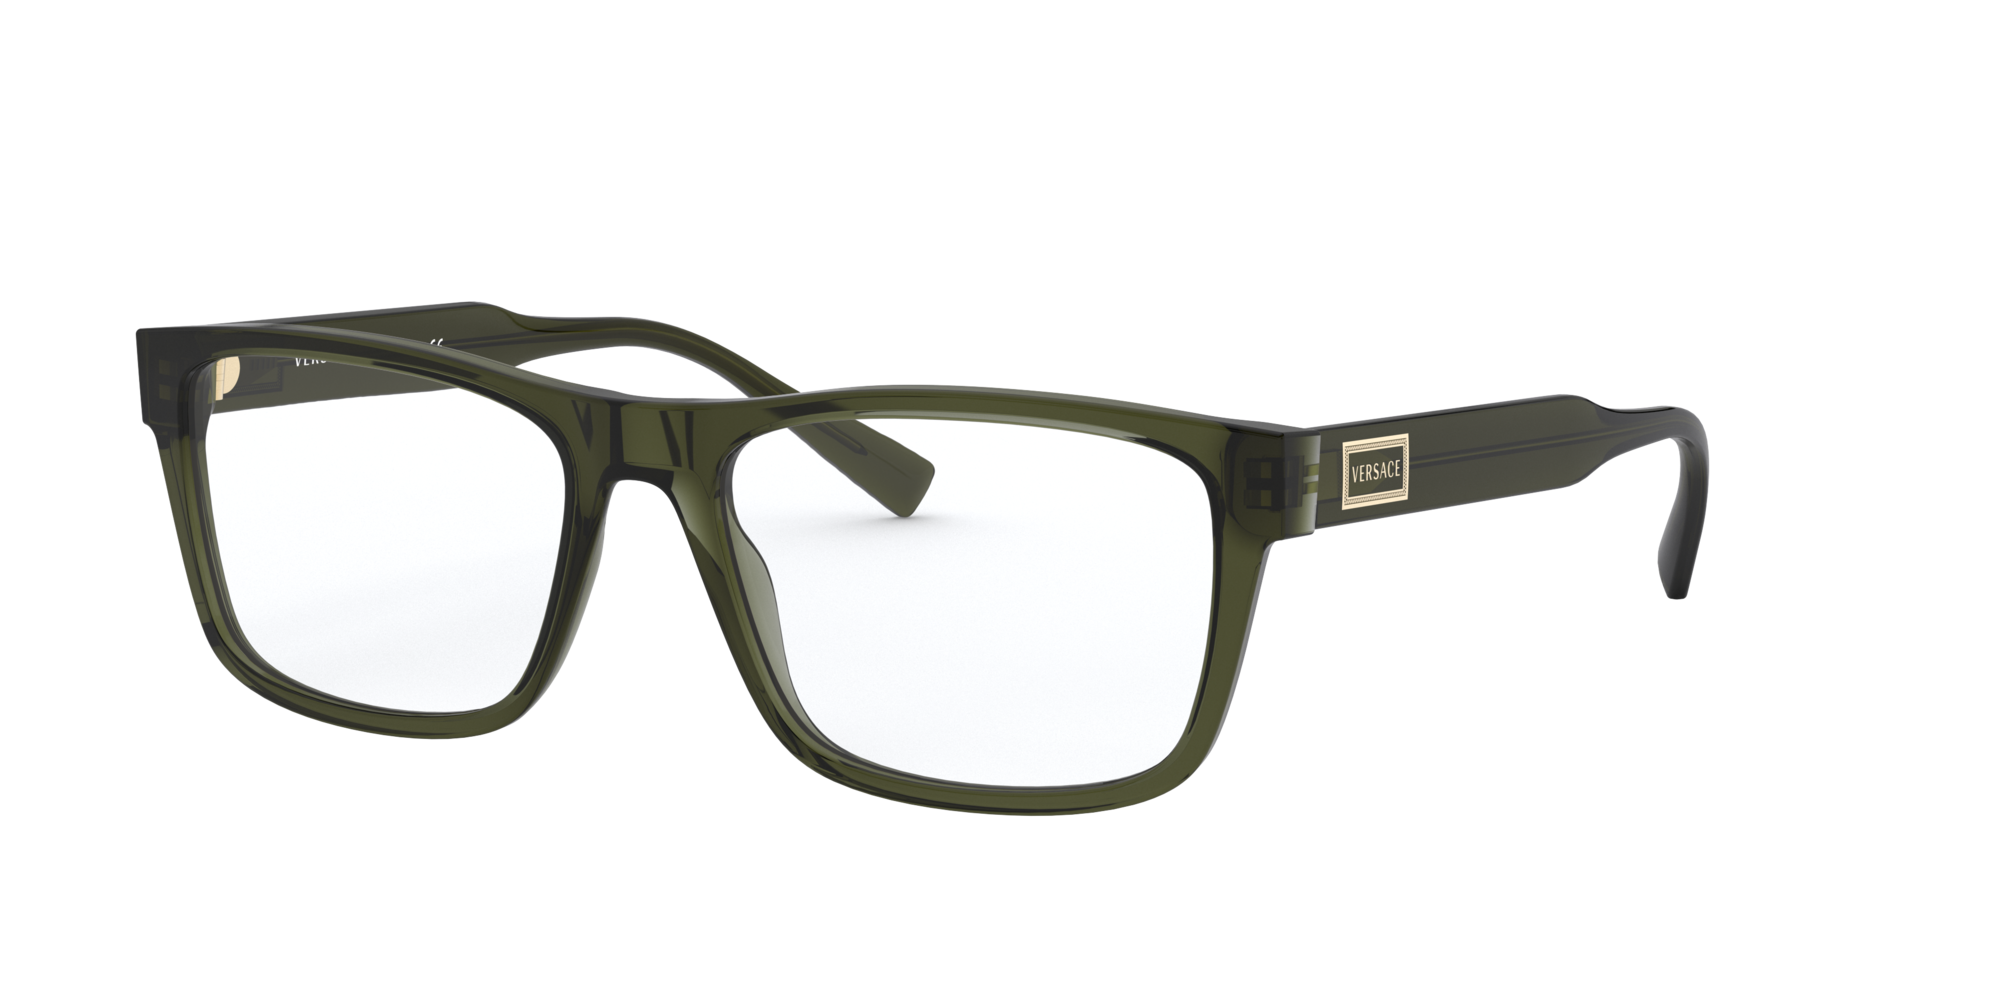 versace glasses frames lenscrafters